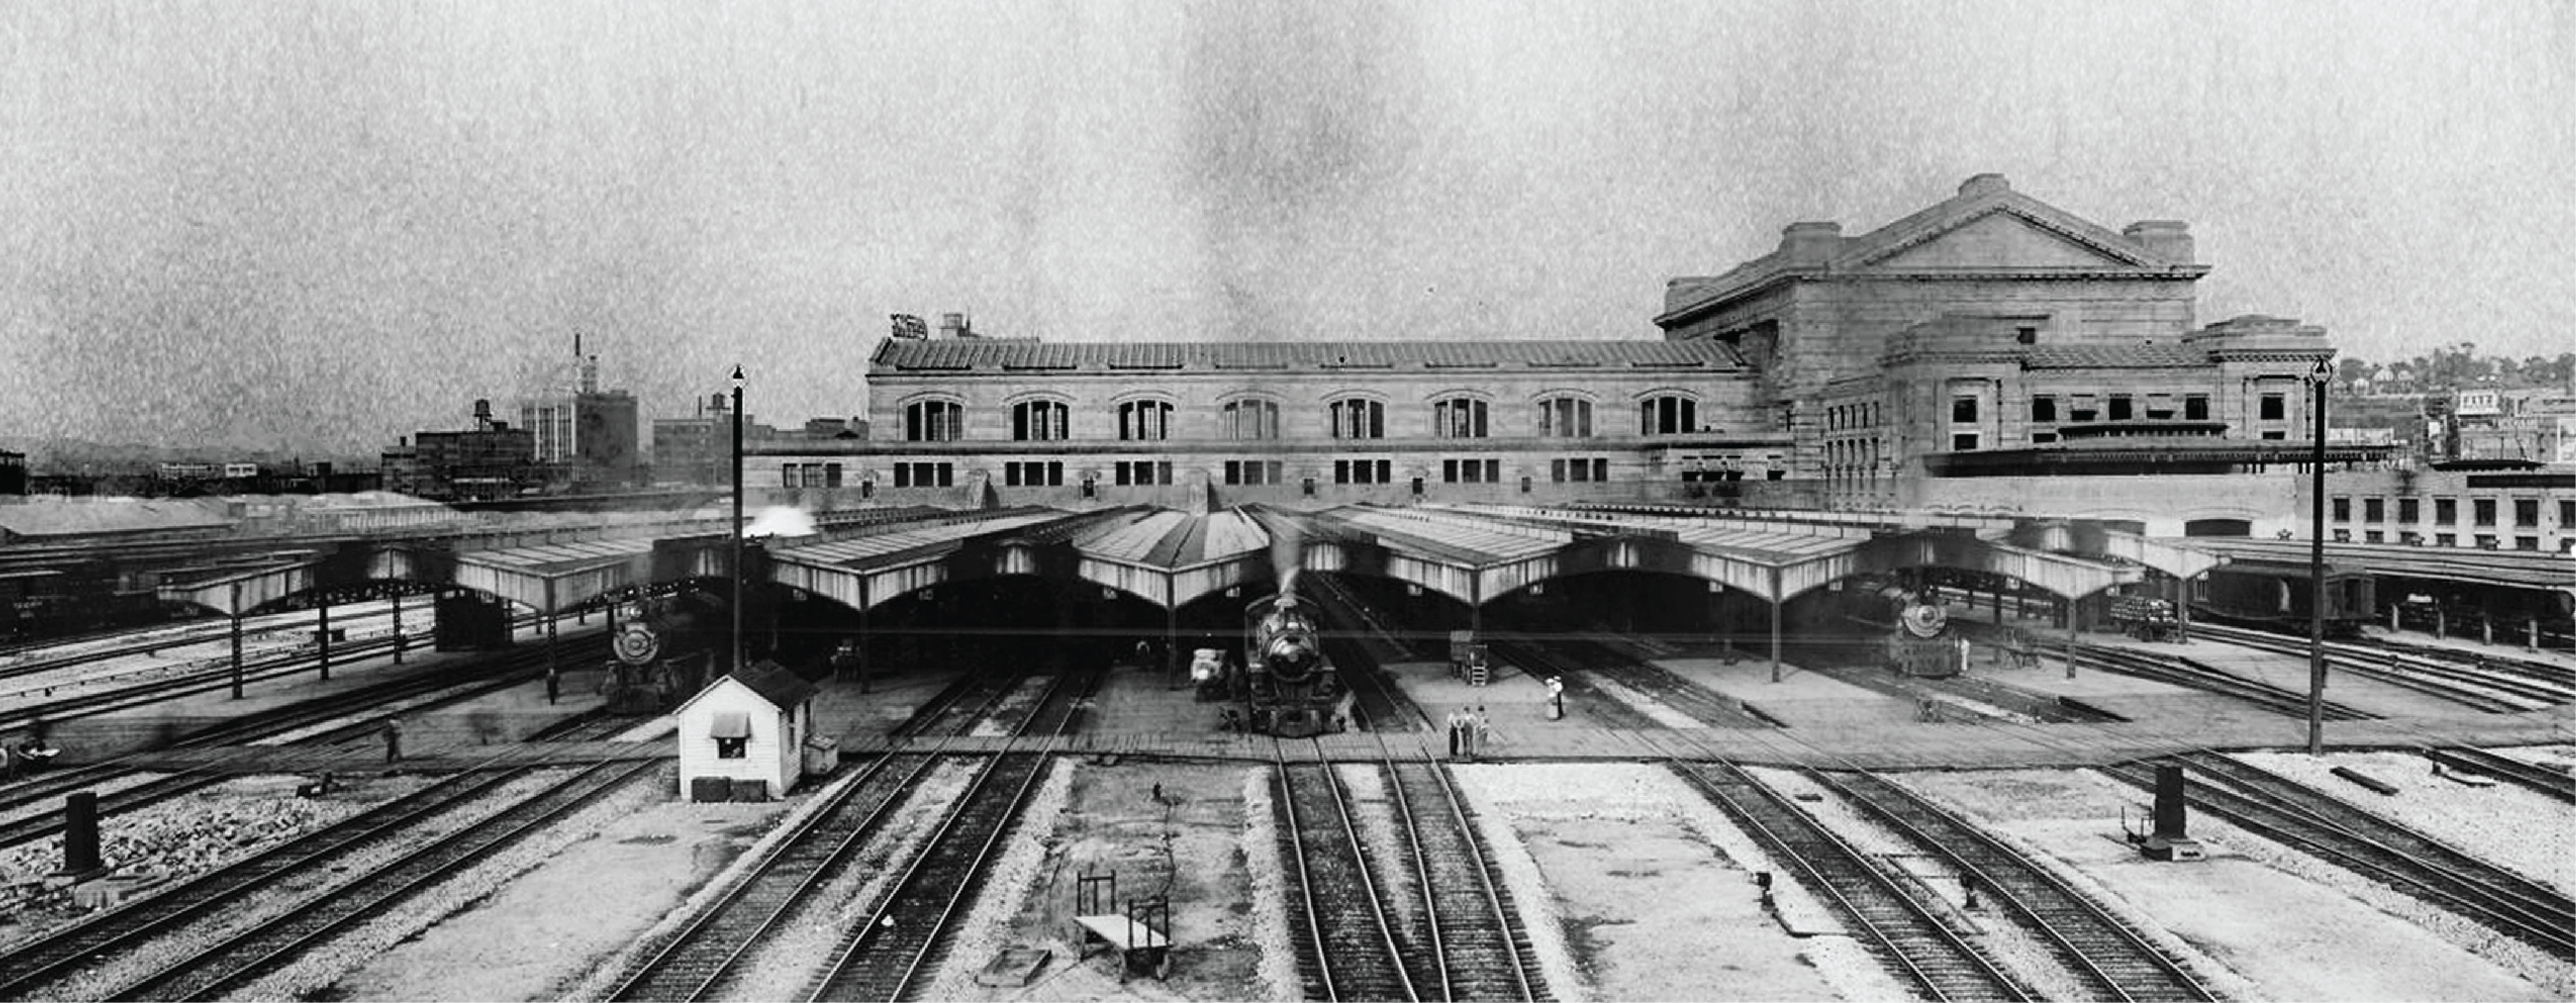 Kansas City's Union Station in 1920.